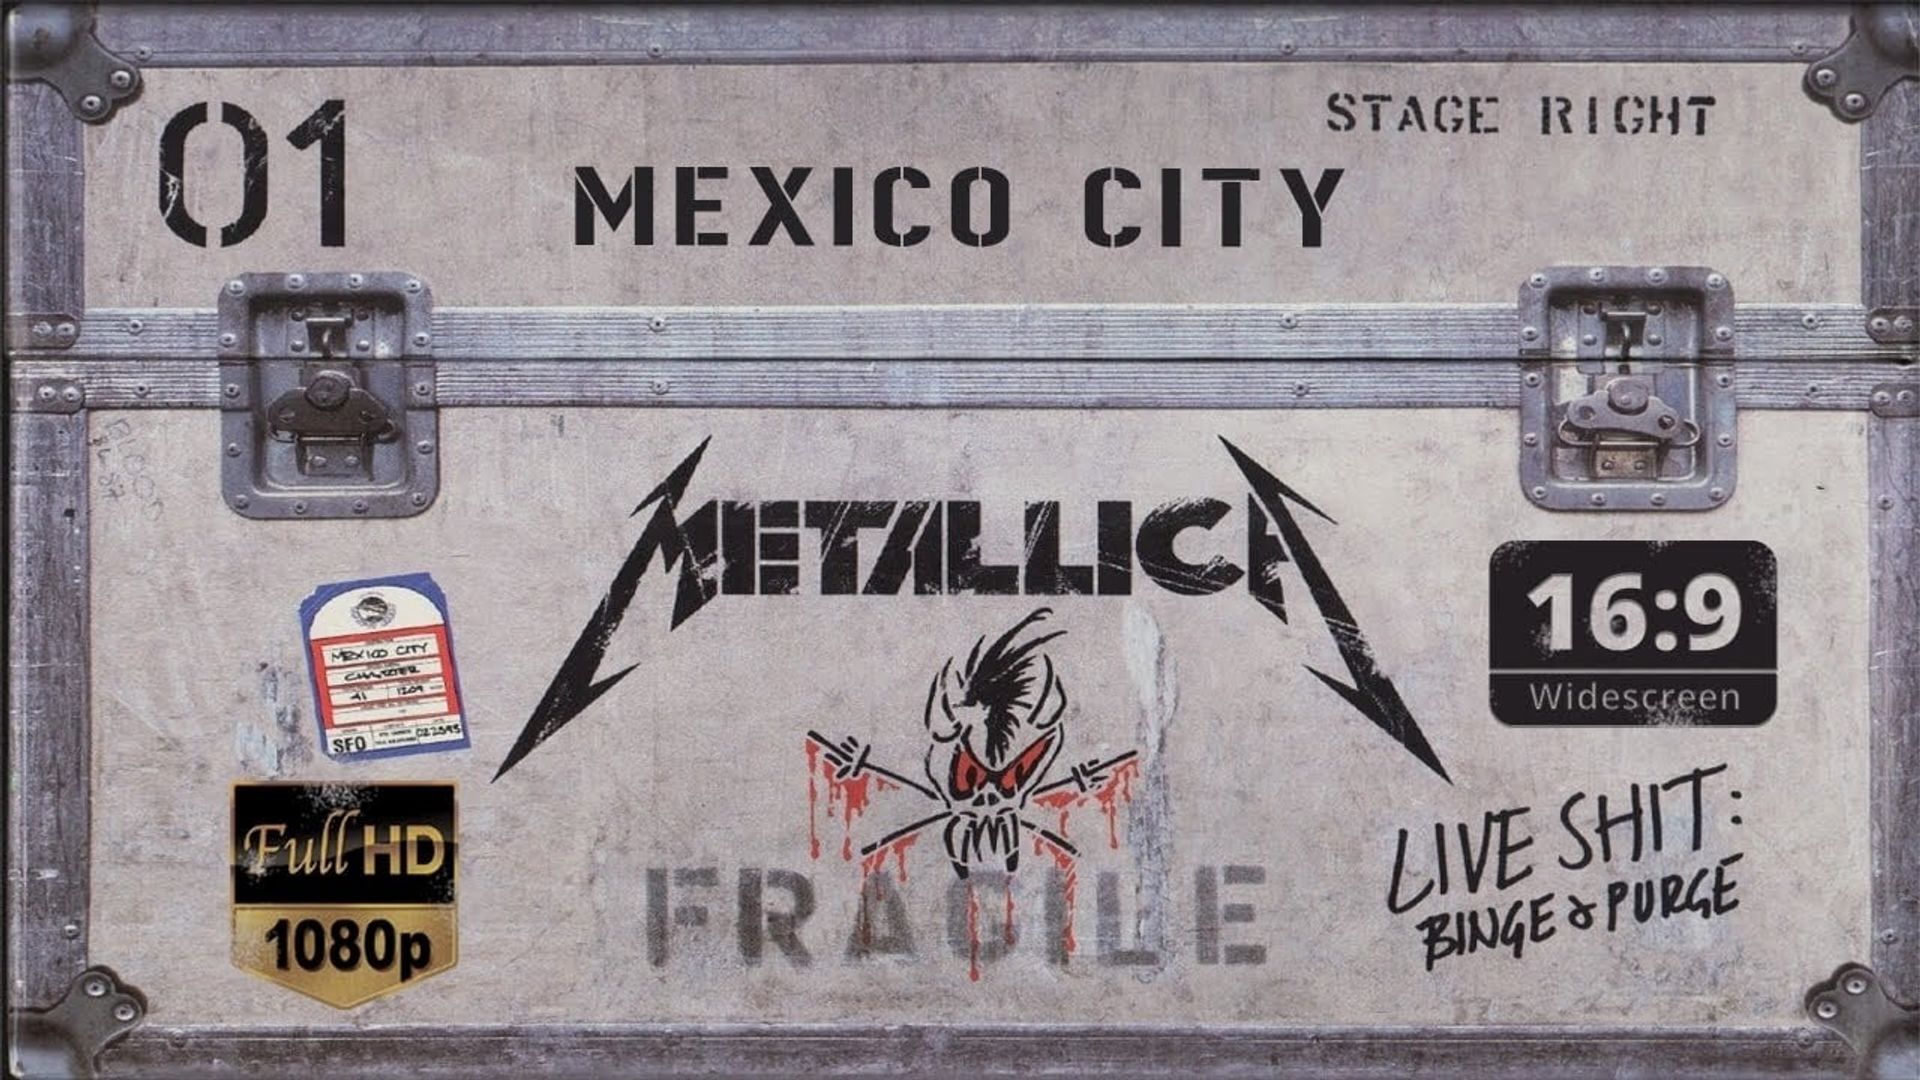 Metallica: Live Shit - Binge & Purge, Seattle background